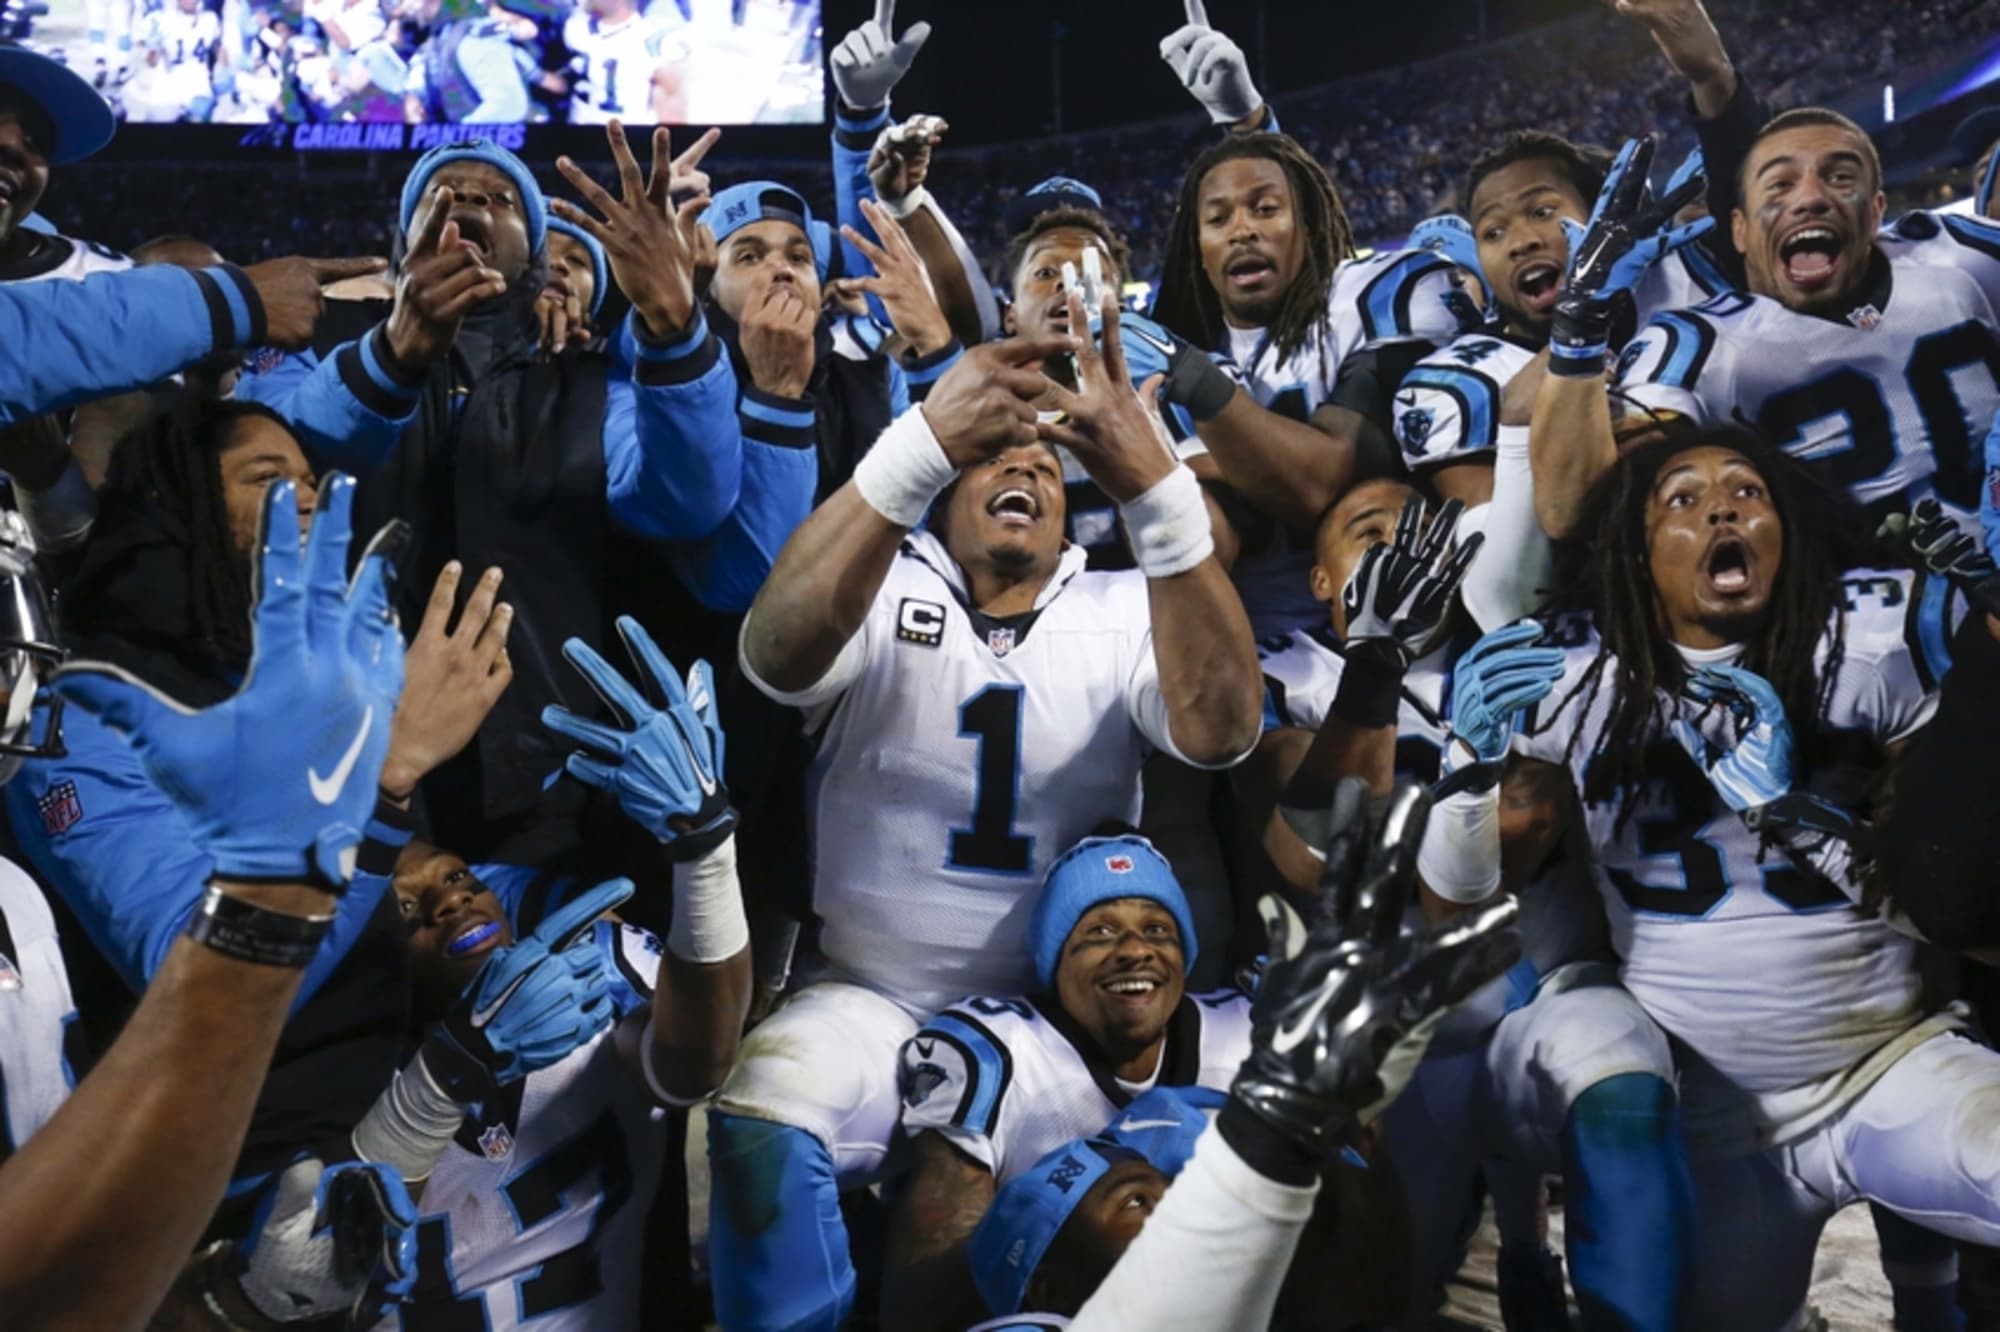 Carolina Panthers: Making a Talented Team Deeper